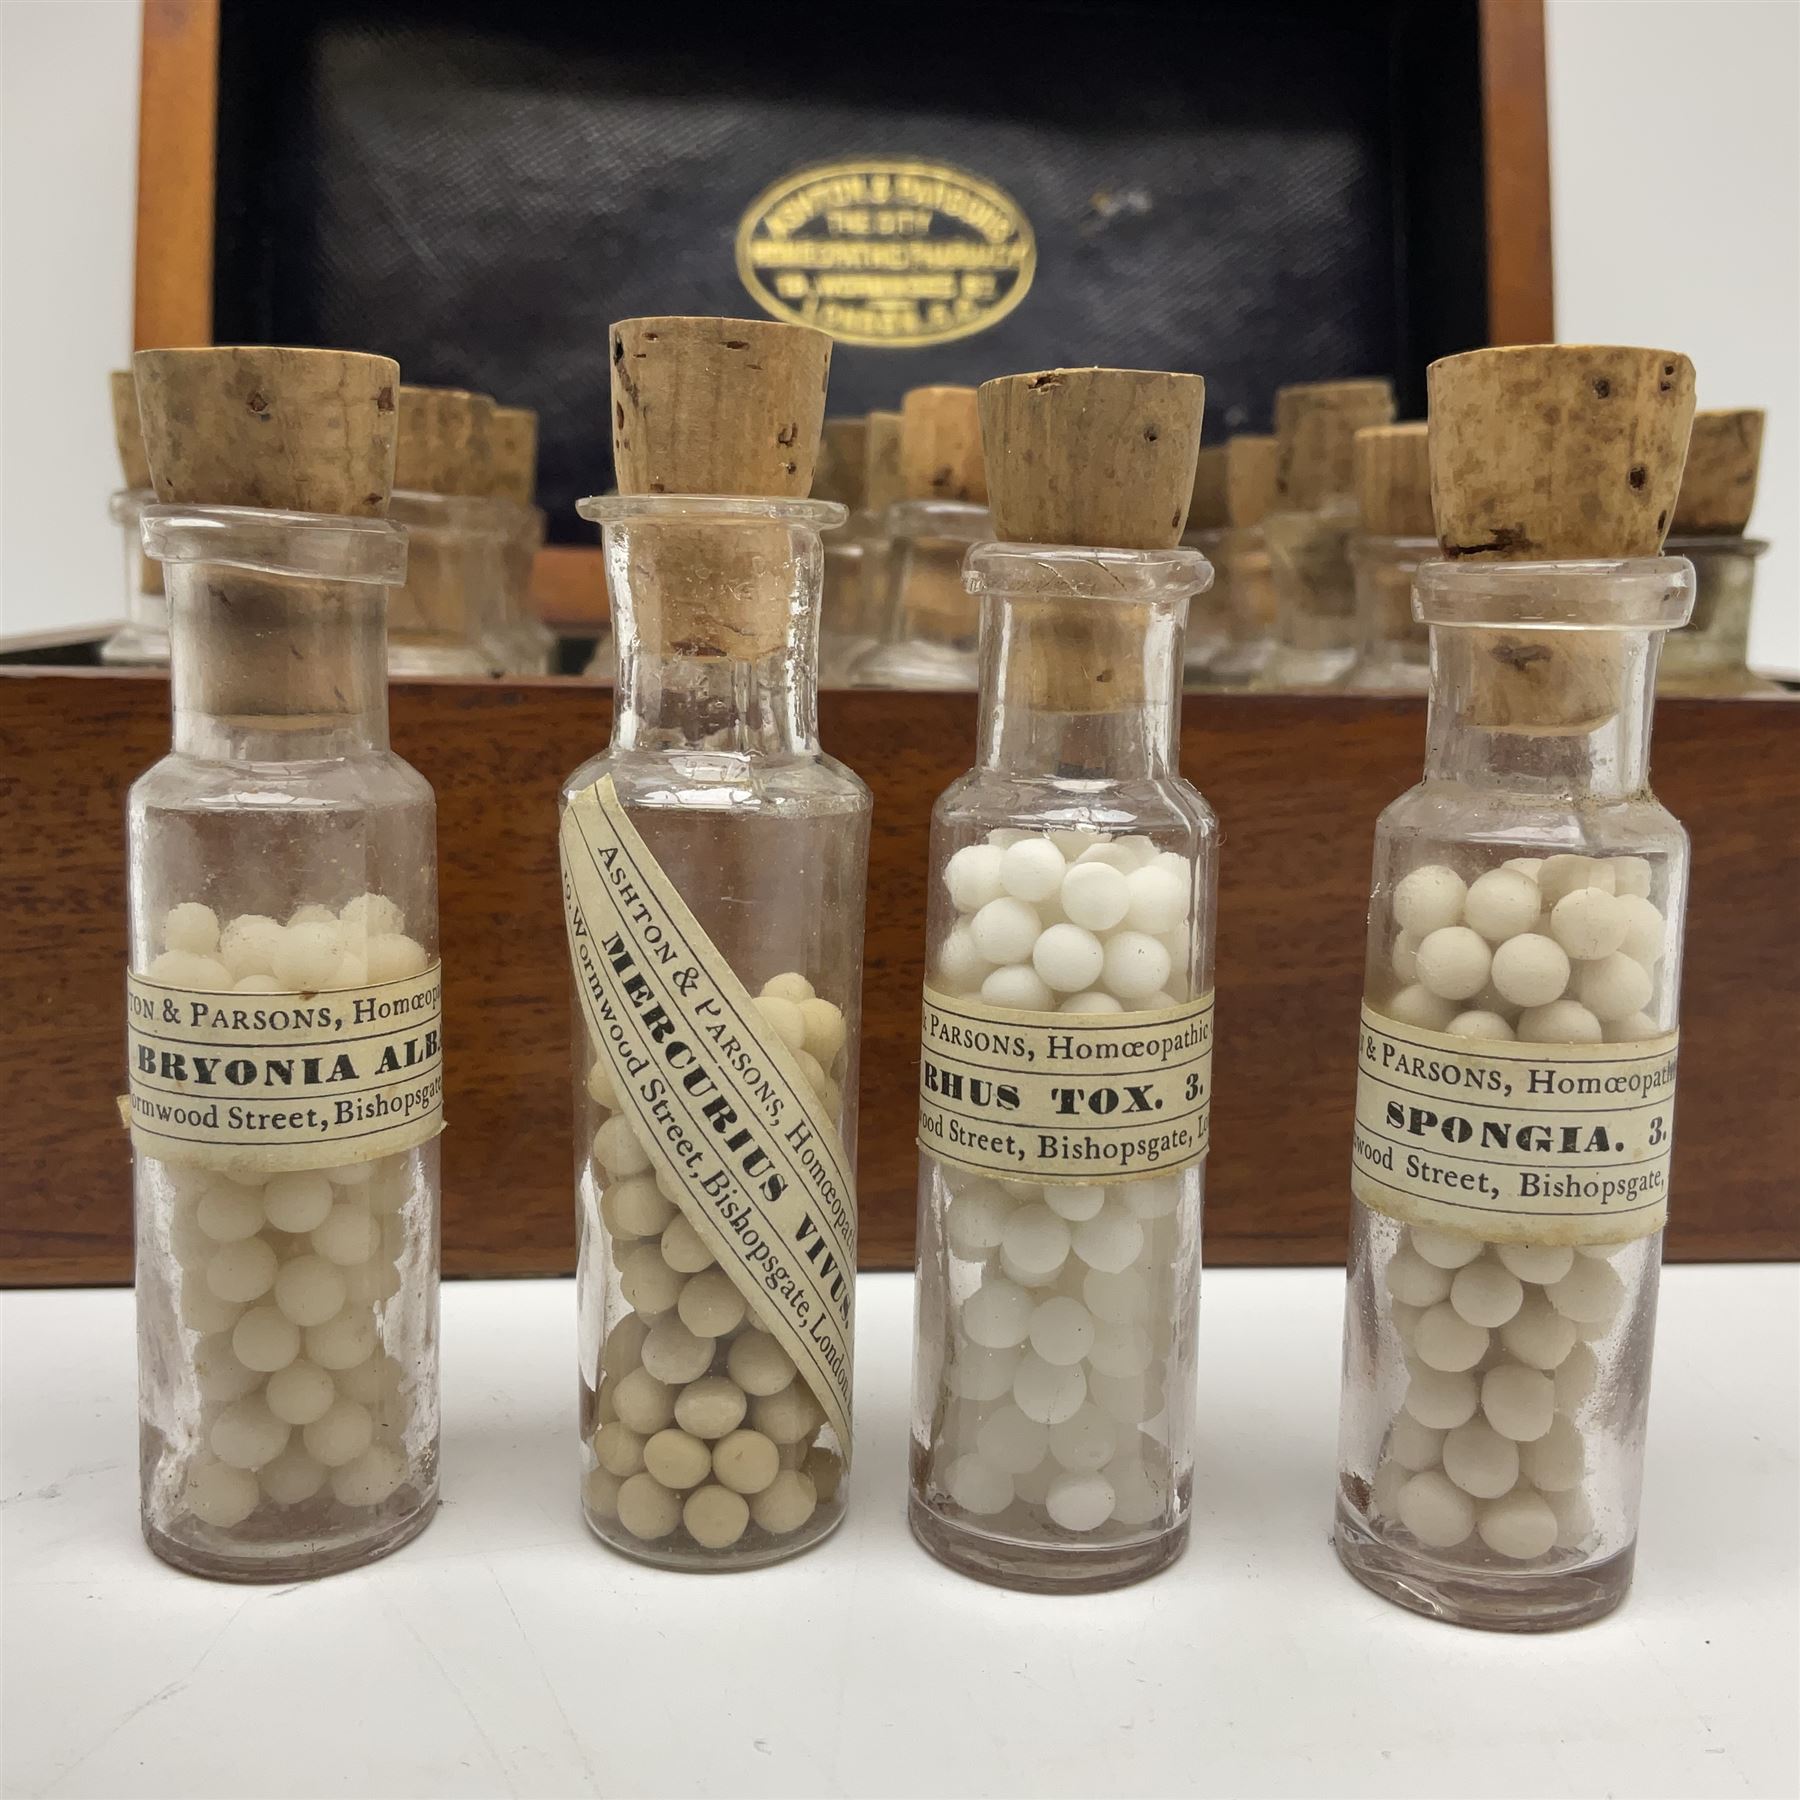 Ashton & Parsons Homeopathic pharmacy box - Image 7 of 12